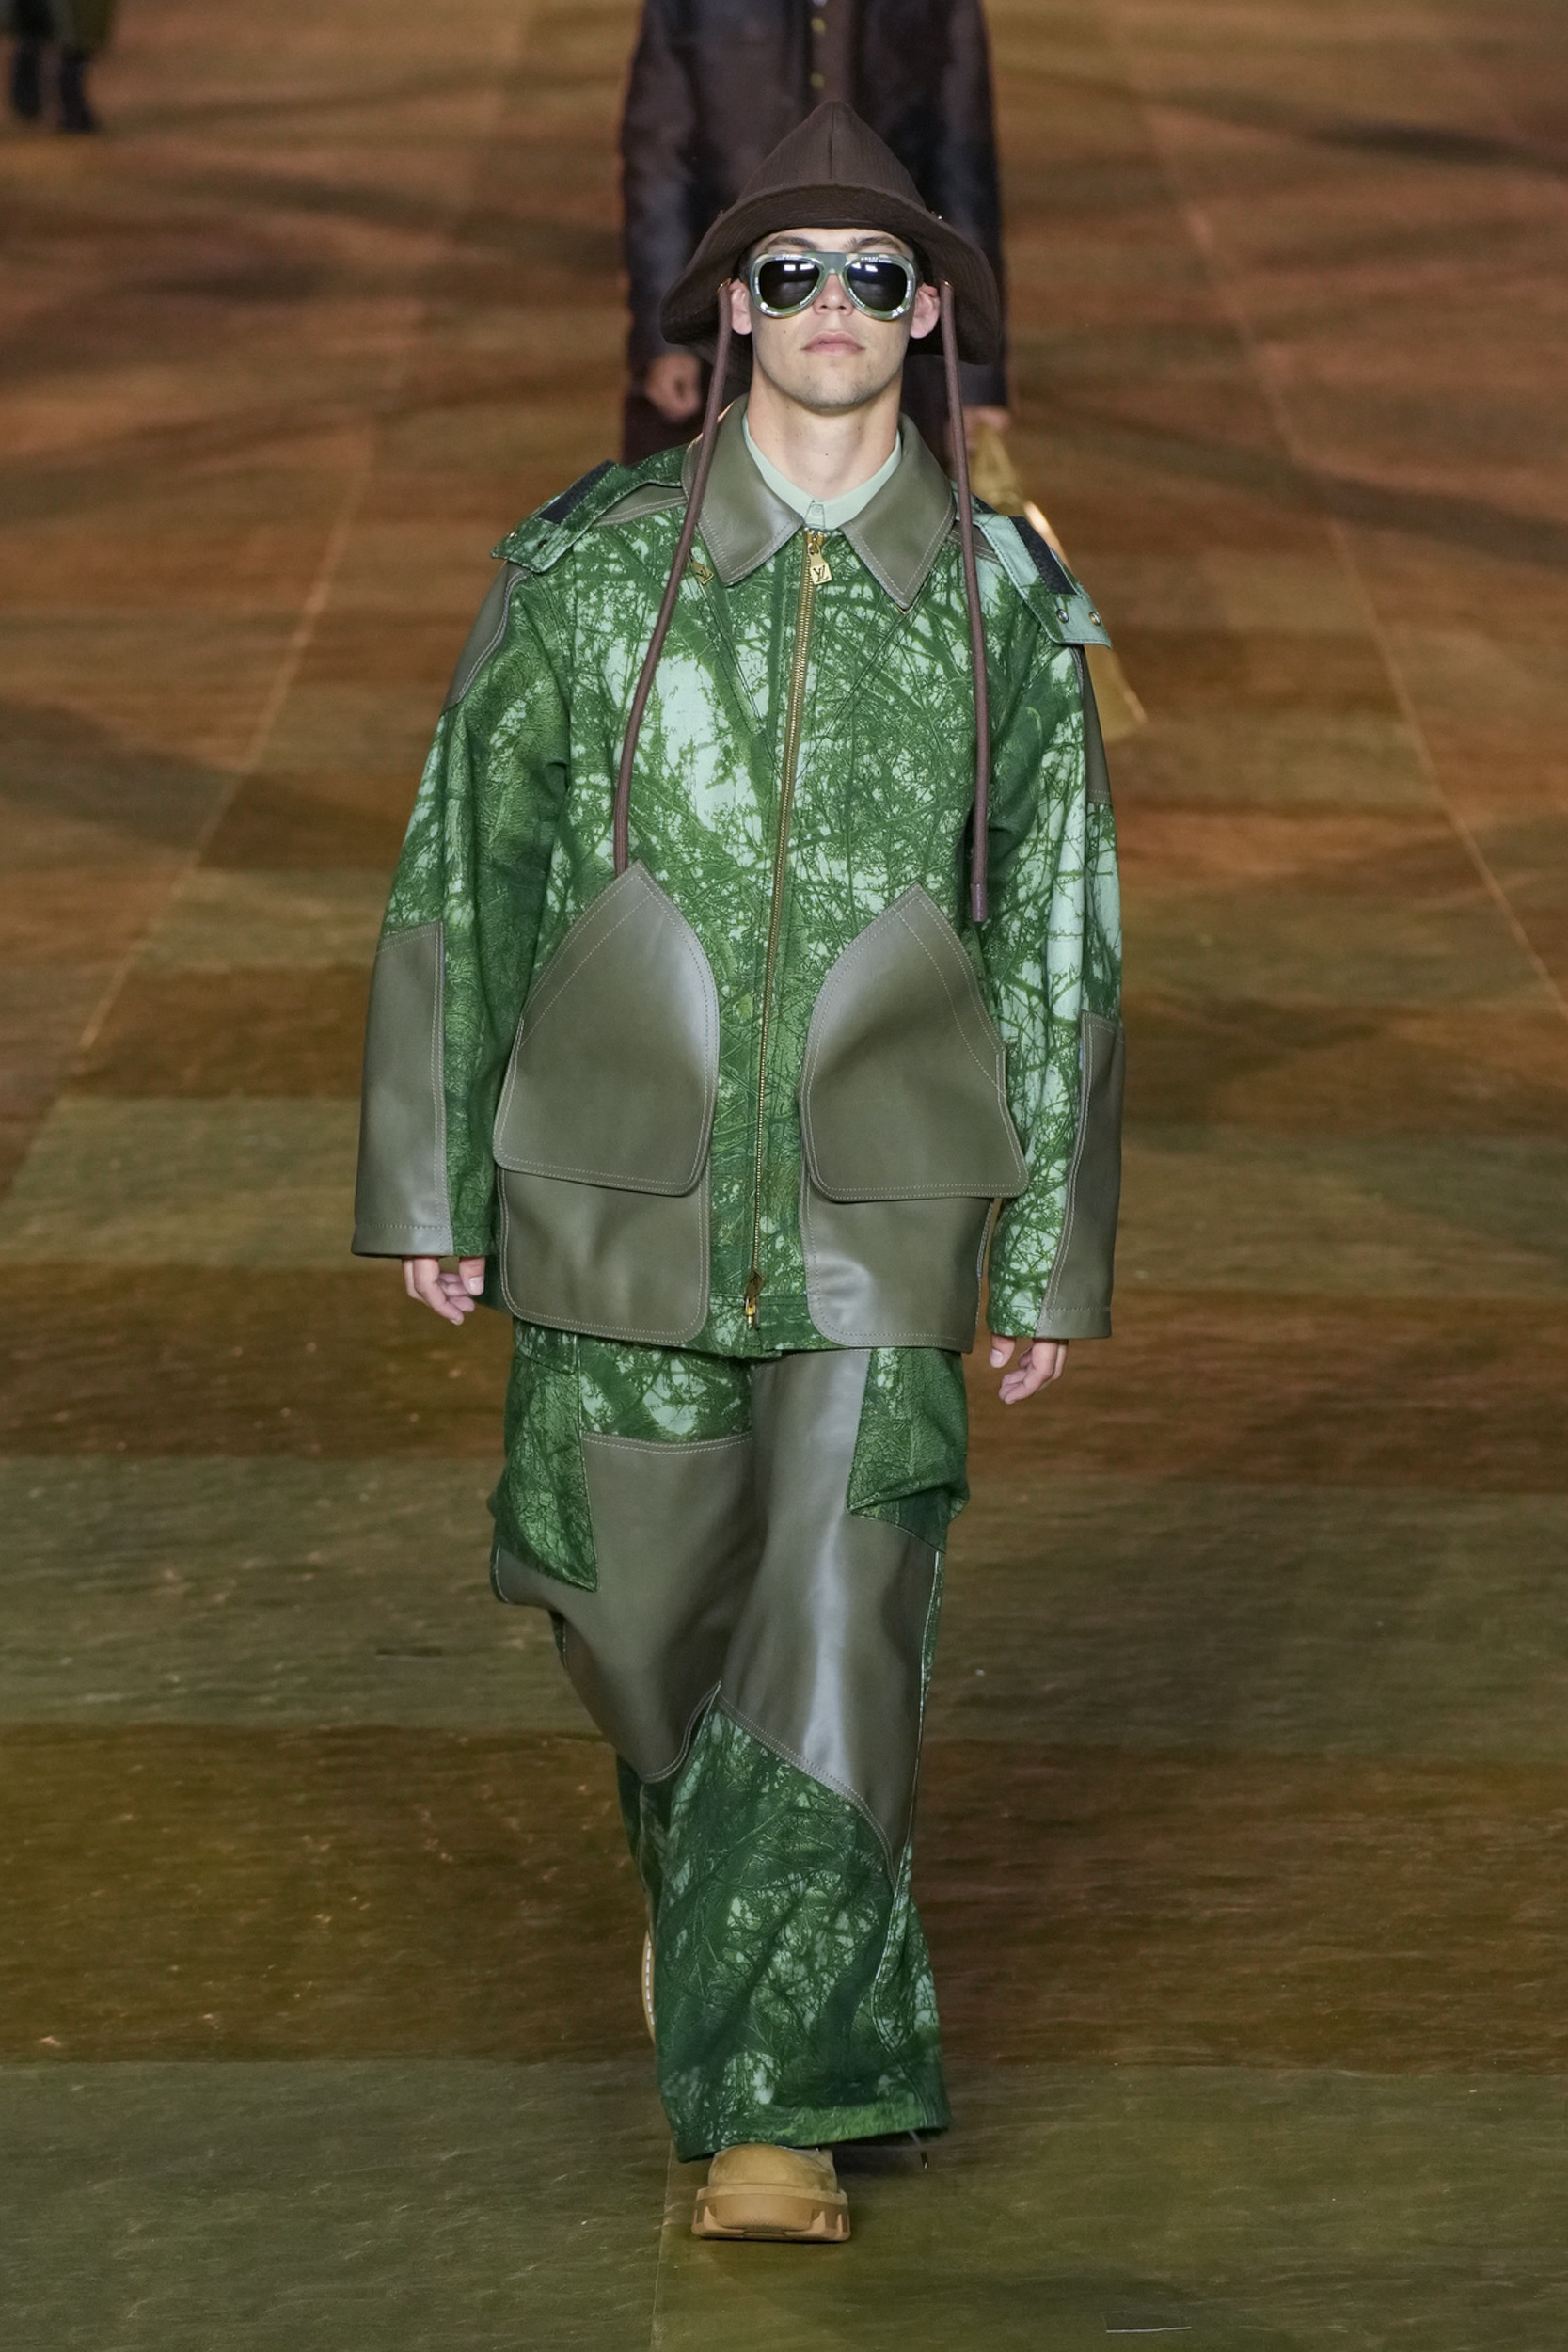 Louis Vuitton Spring 2023 Men's Fashion Show Review